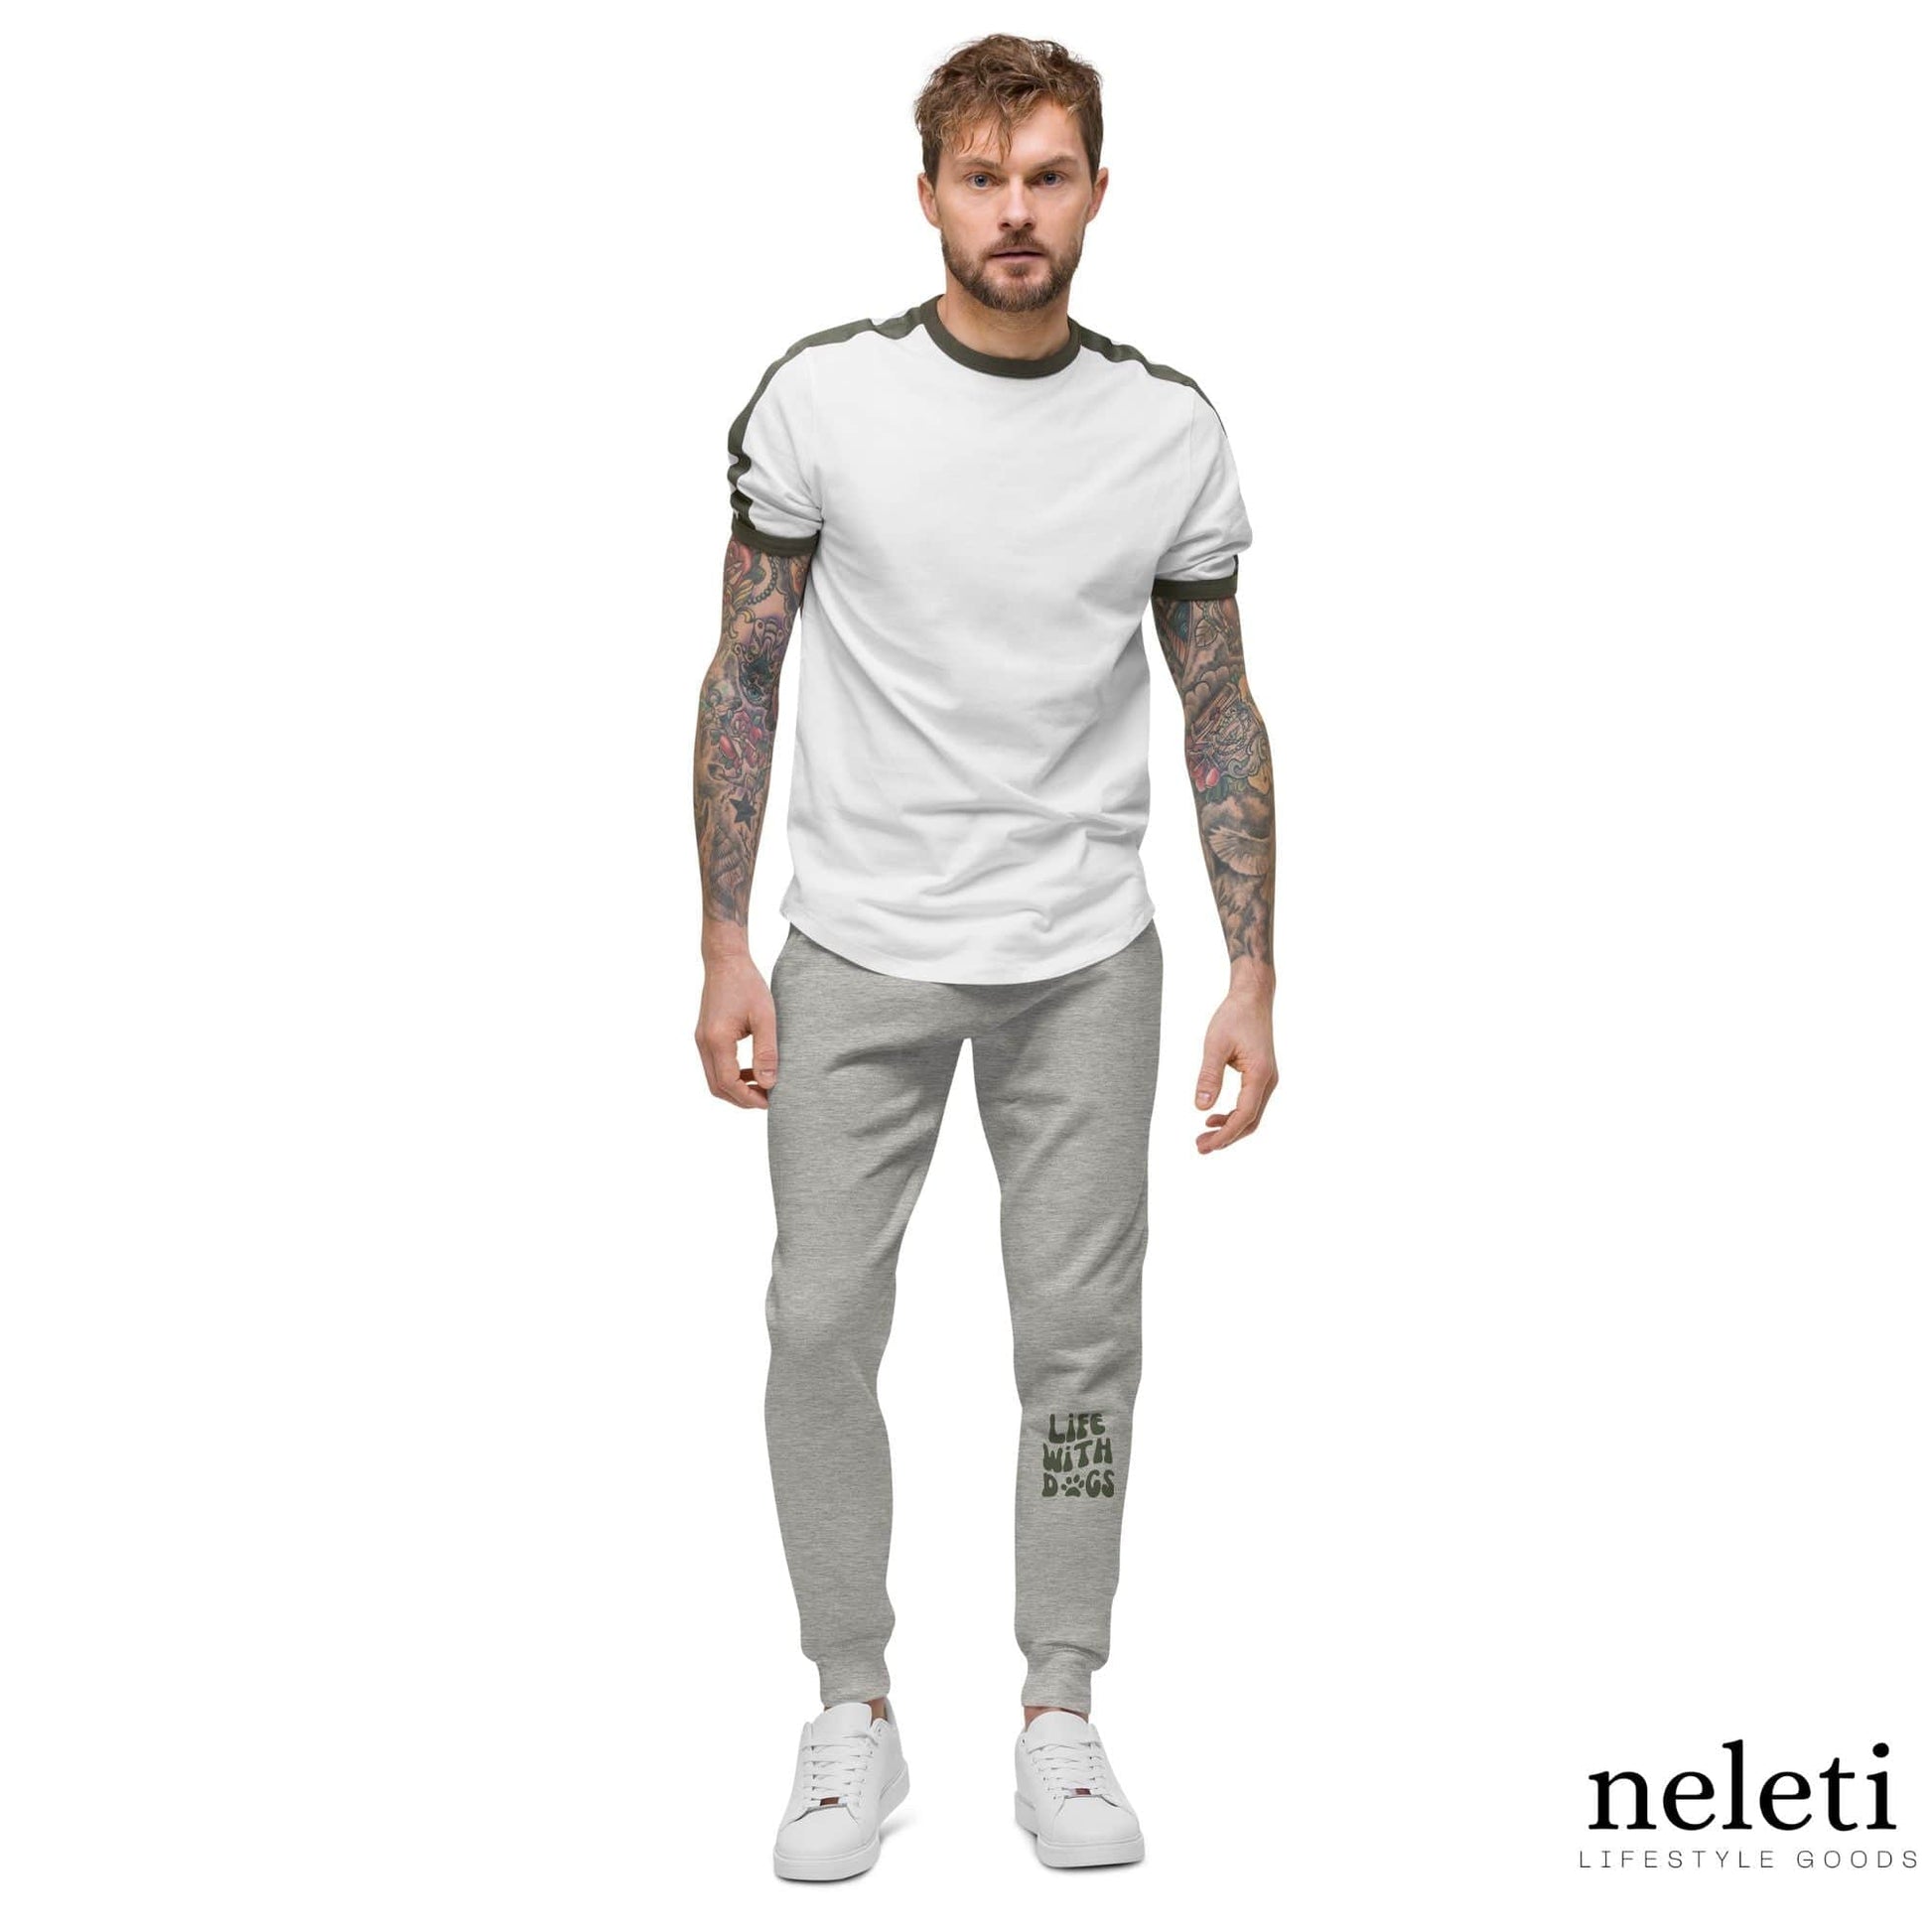    neleti.com-Grey-Fleece-Sweatpants